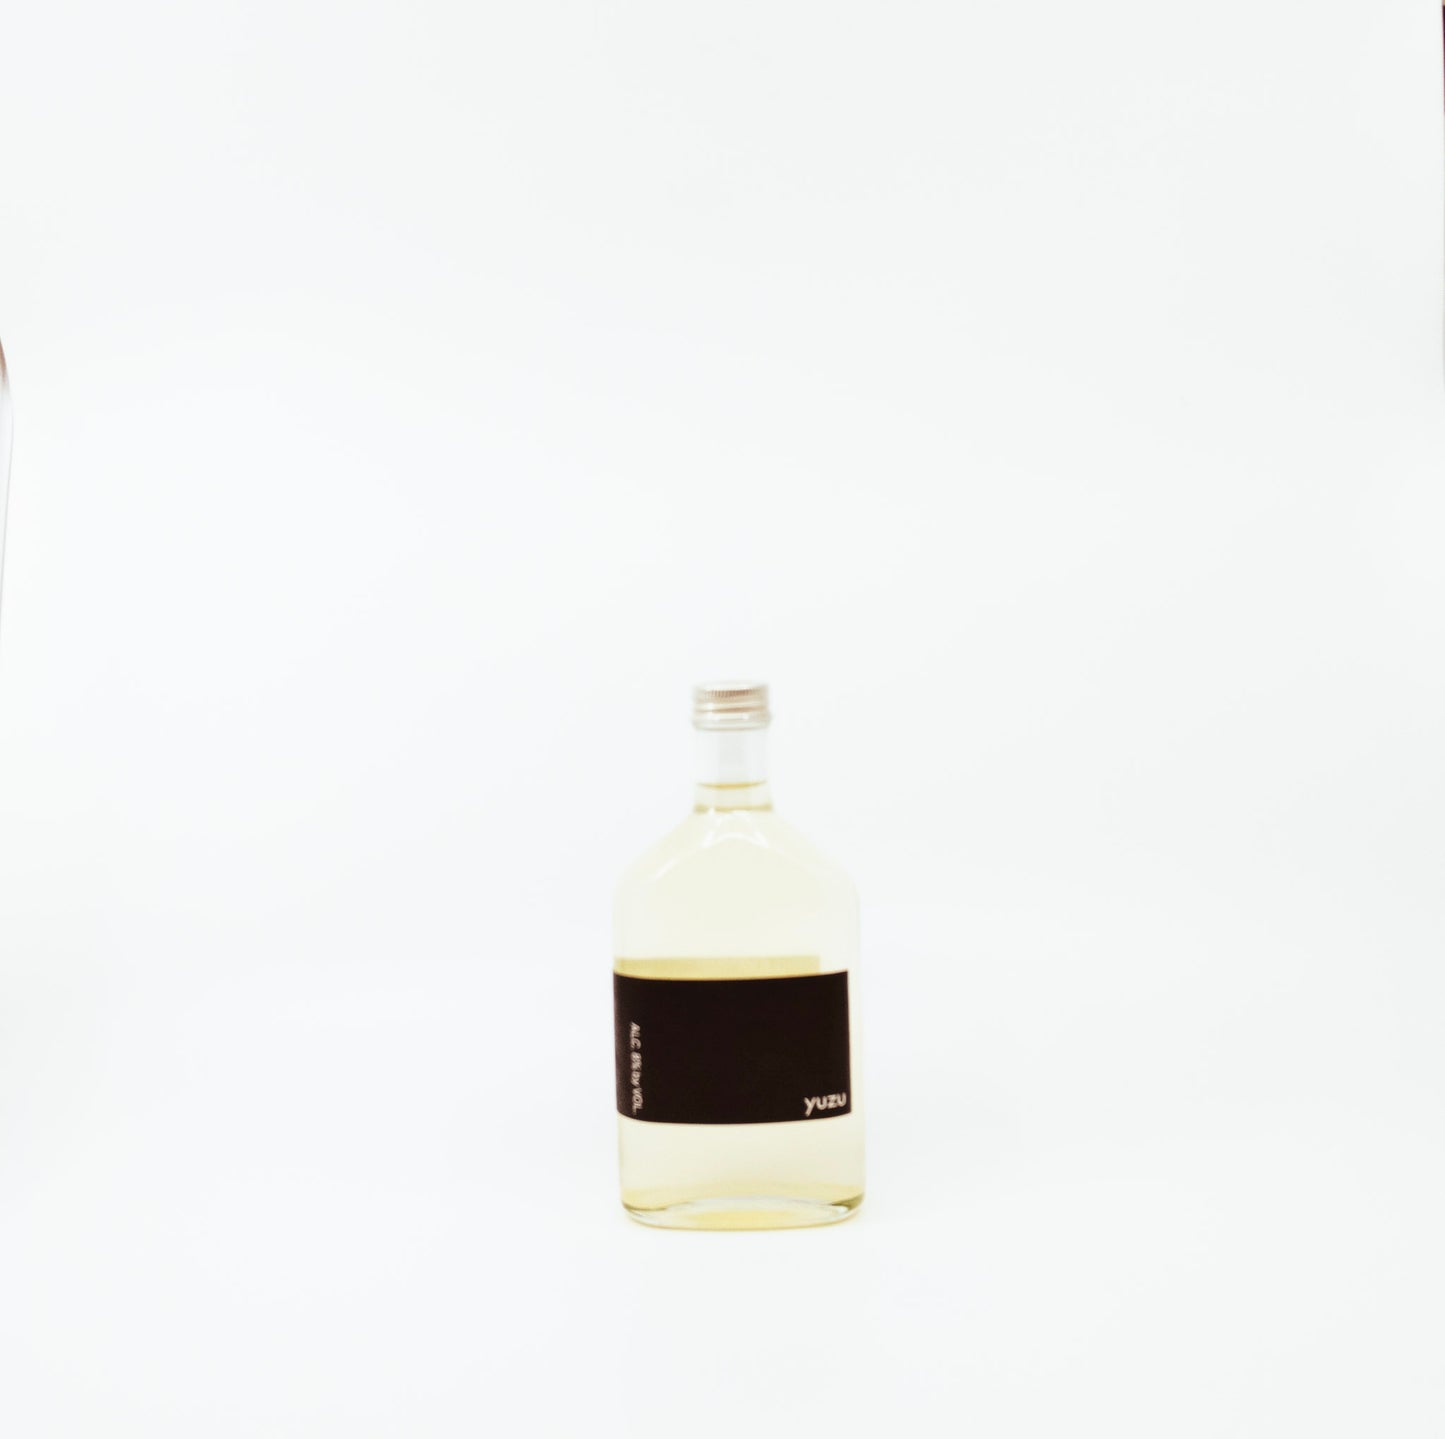 short glass bottle with black label